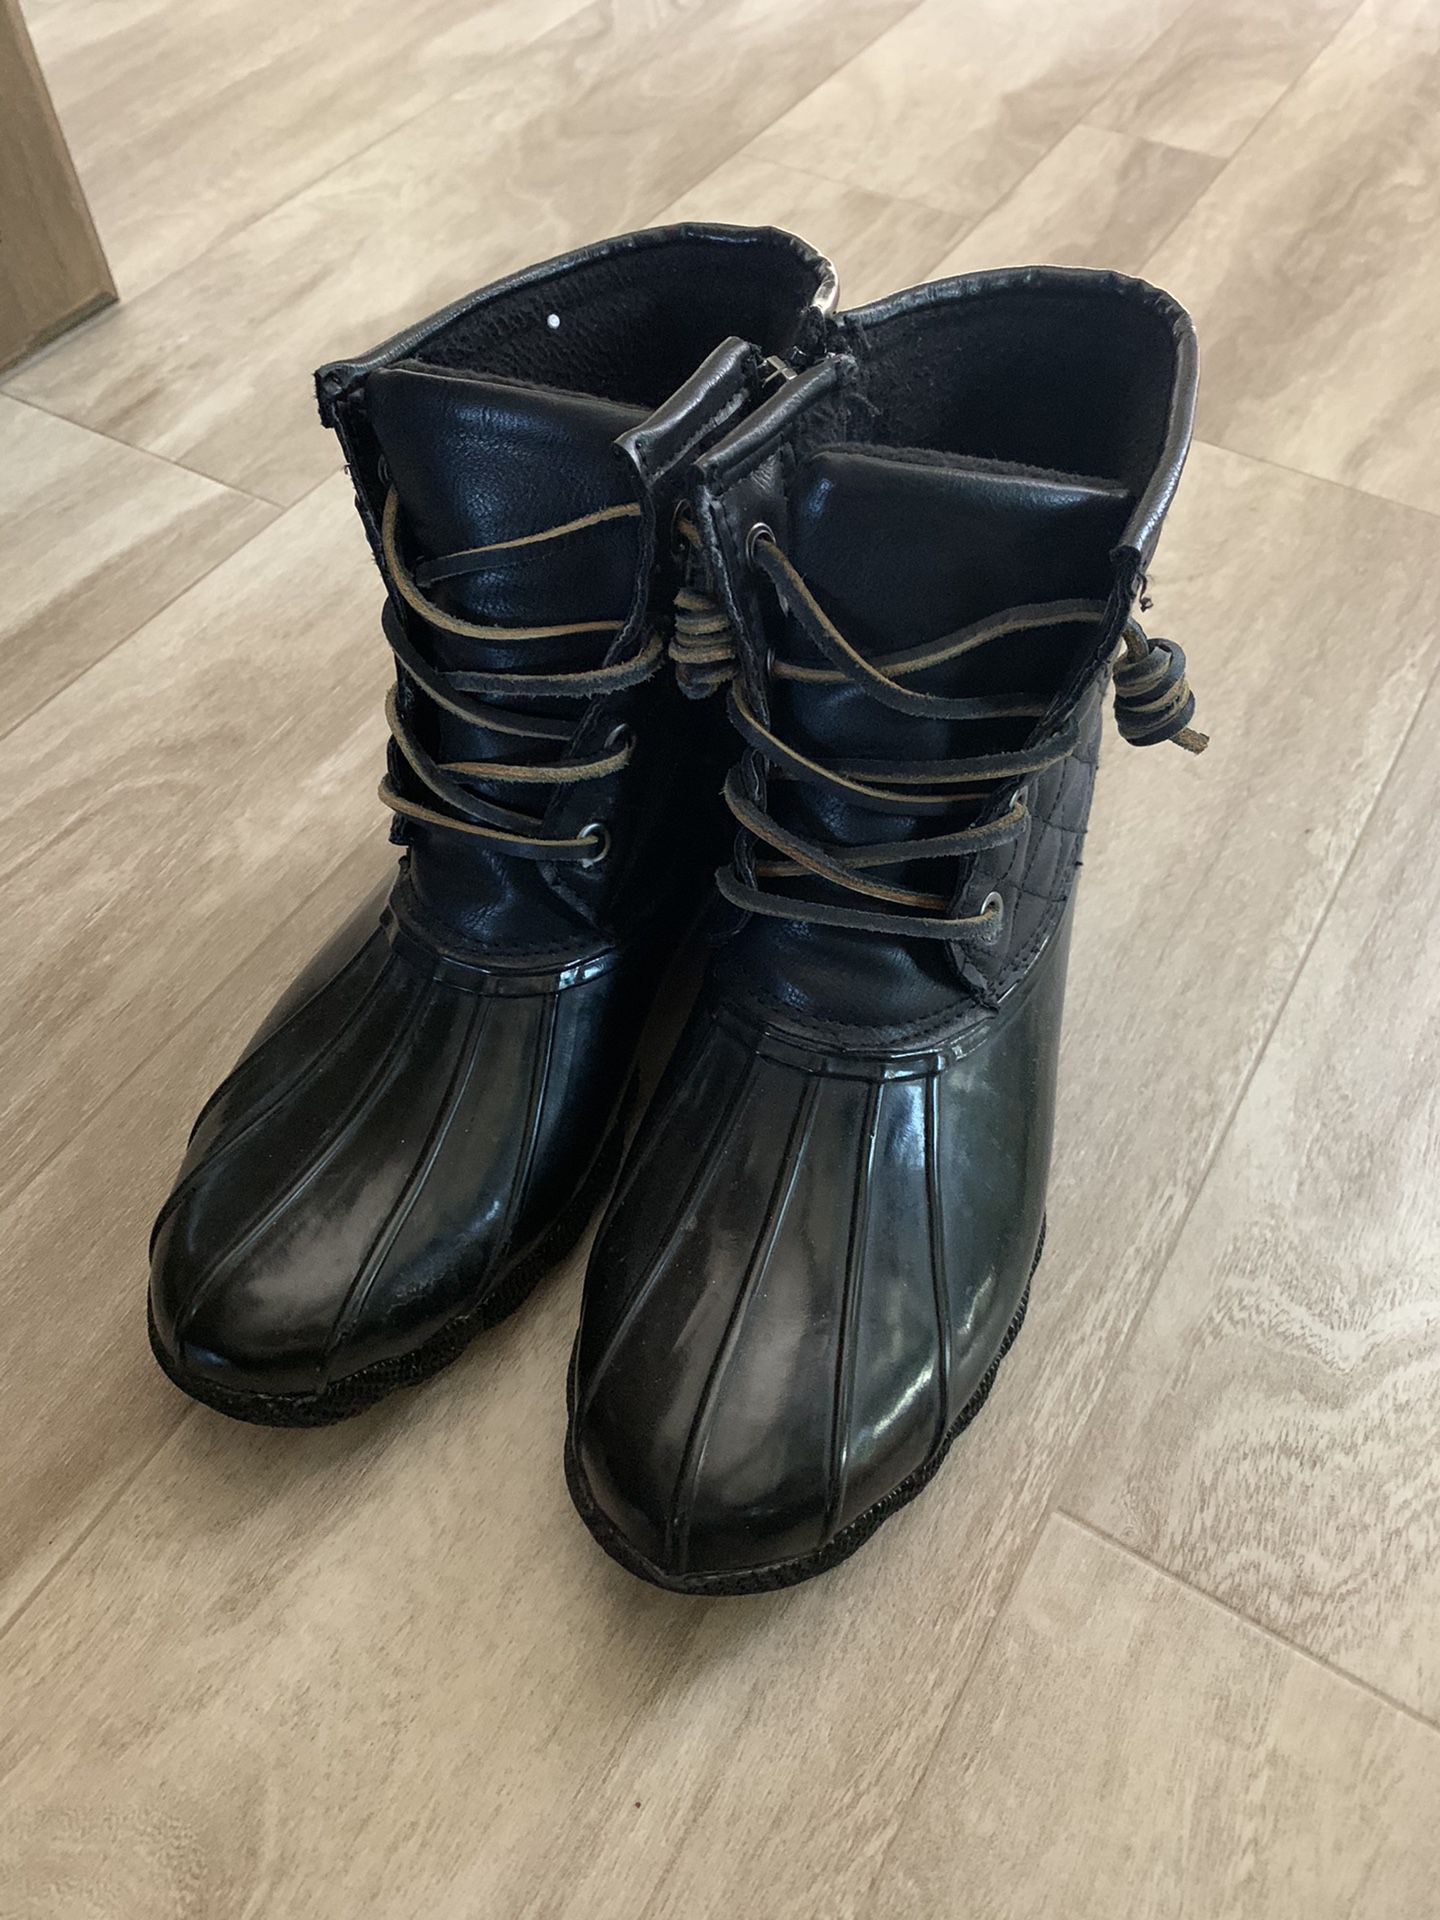 Women’s Steve Madden rain boots size 8